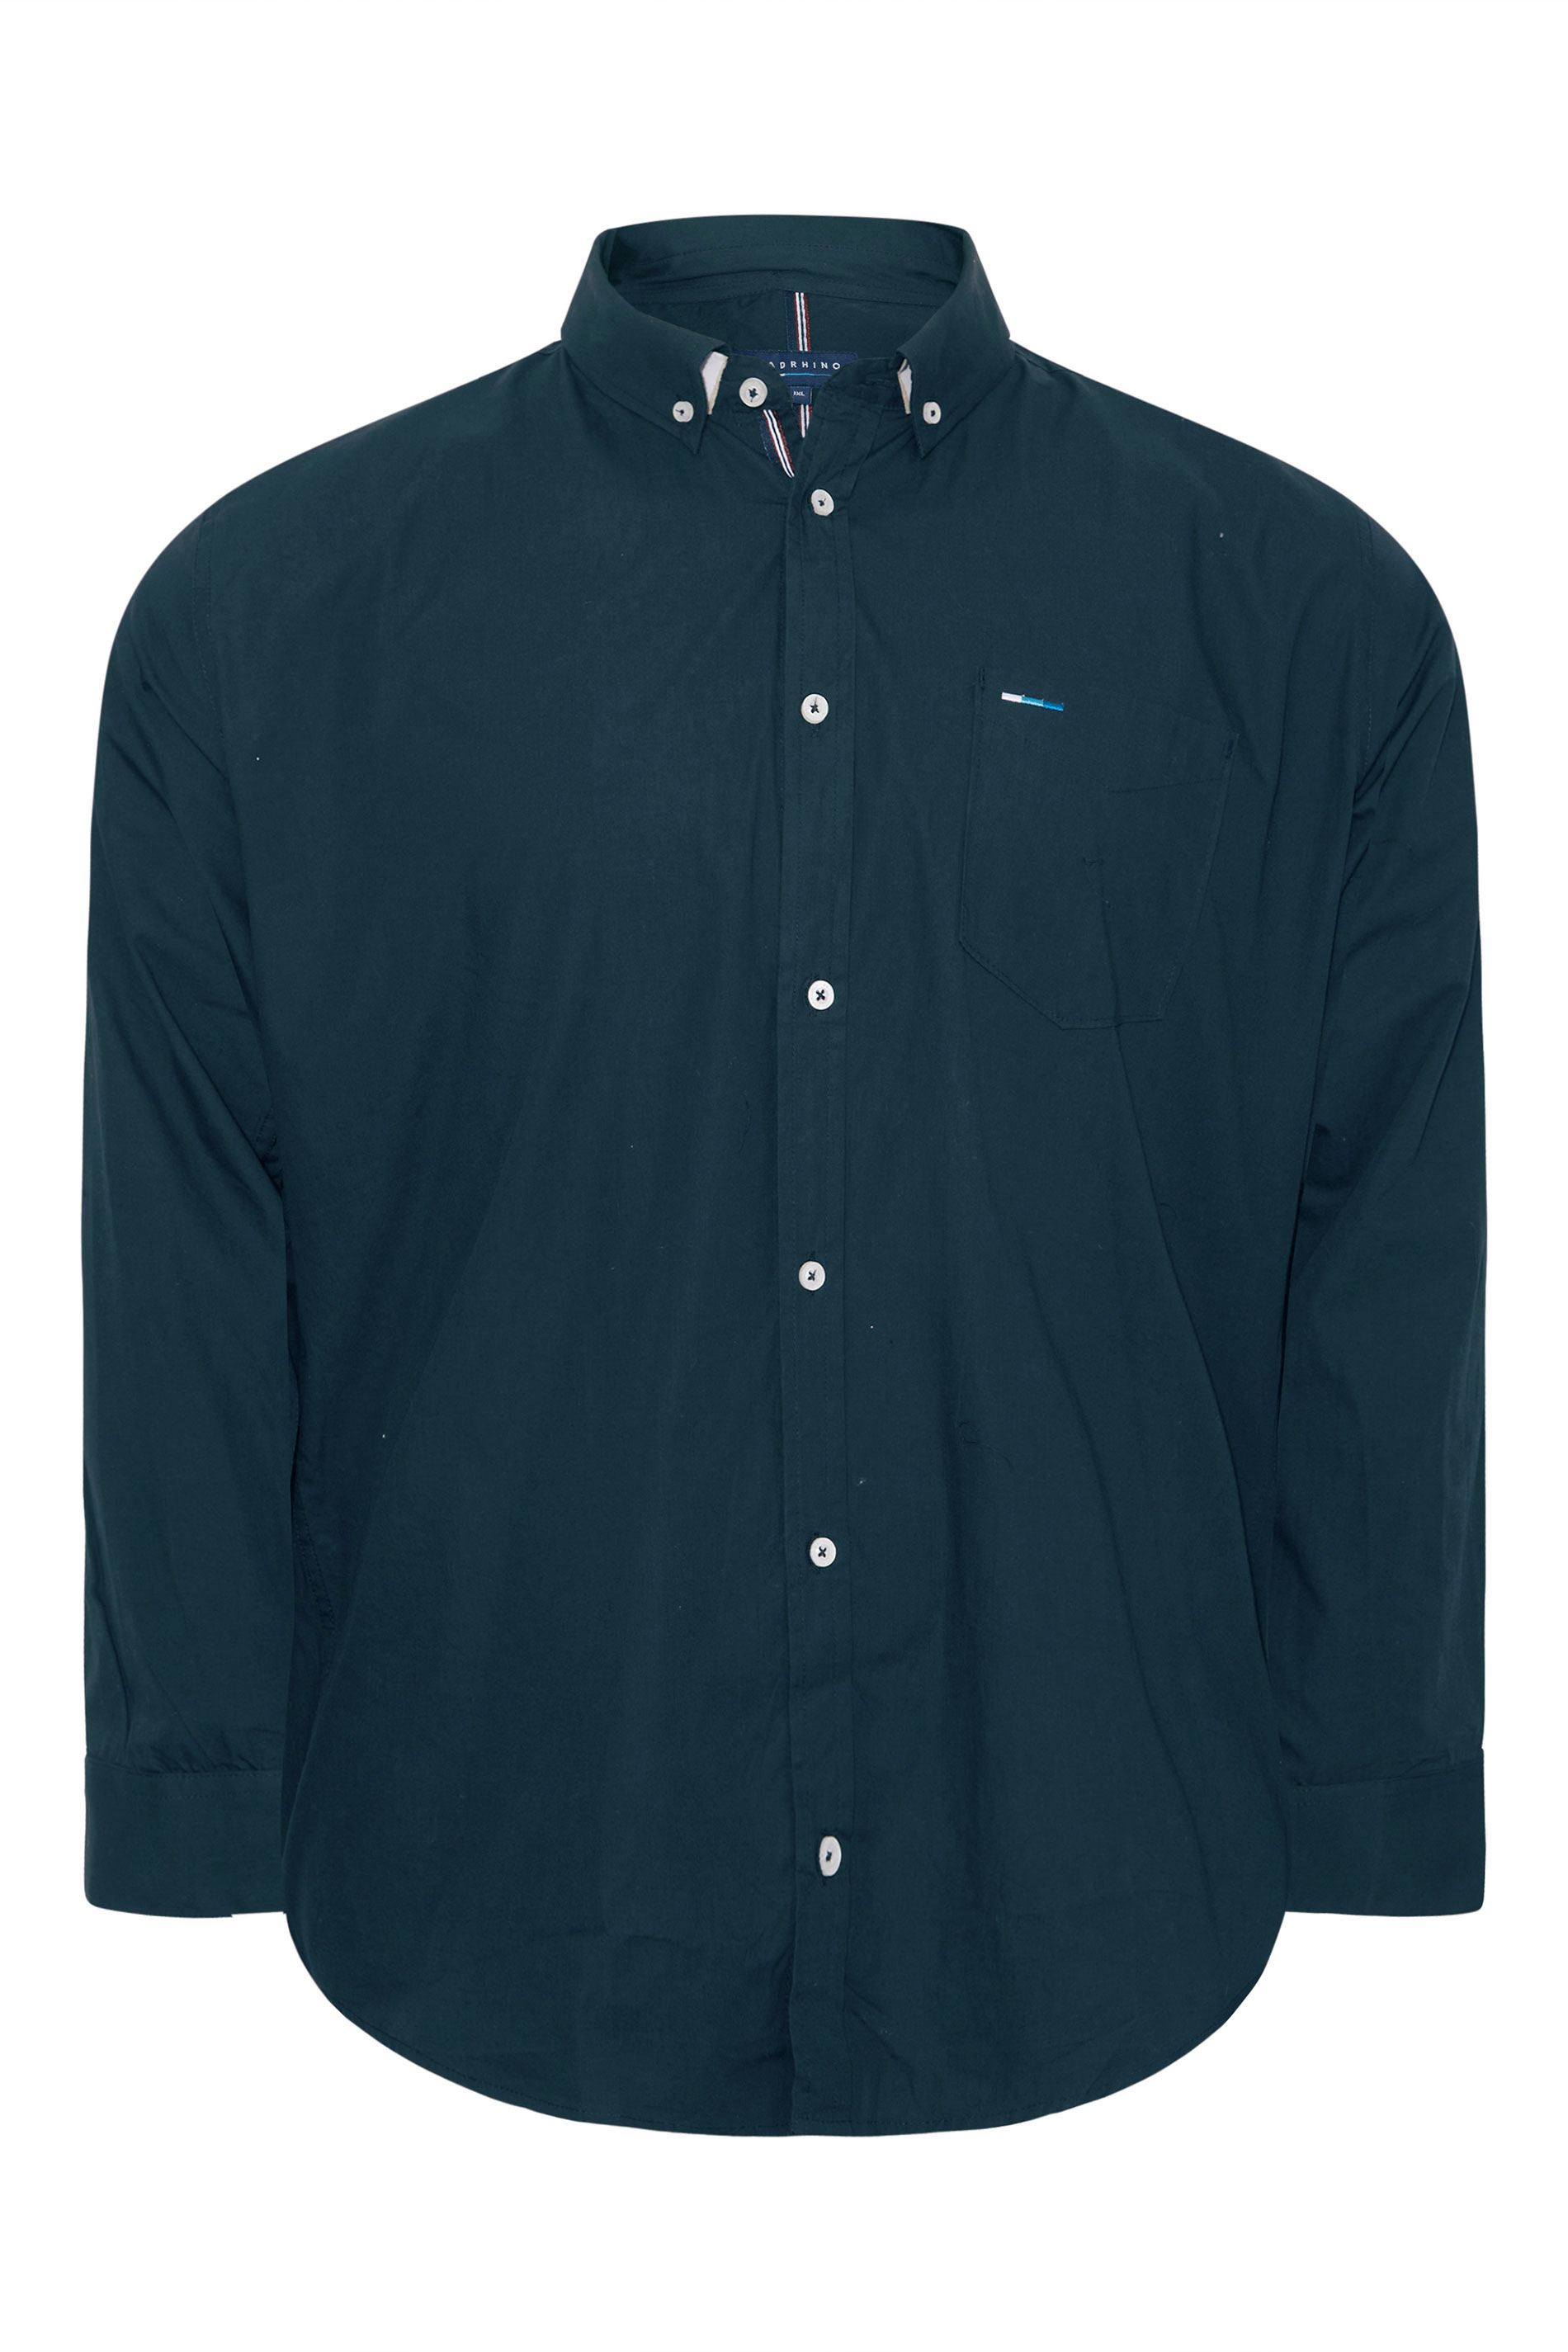 BadRhino Navy Blue Cotton Poplin Long Sleeve Shirt | BadRhino 3